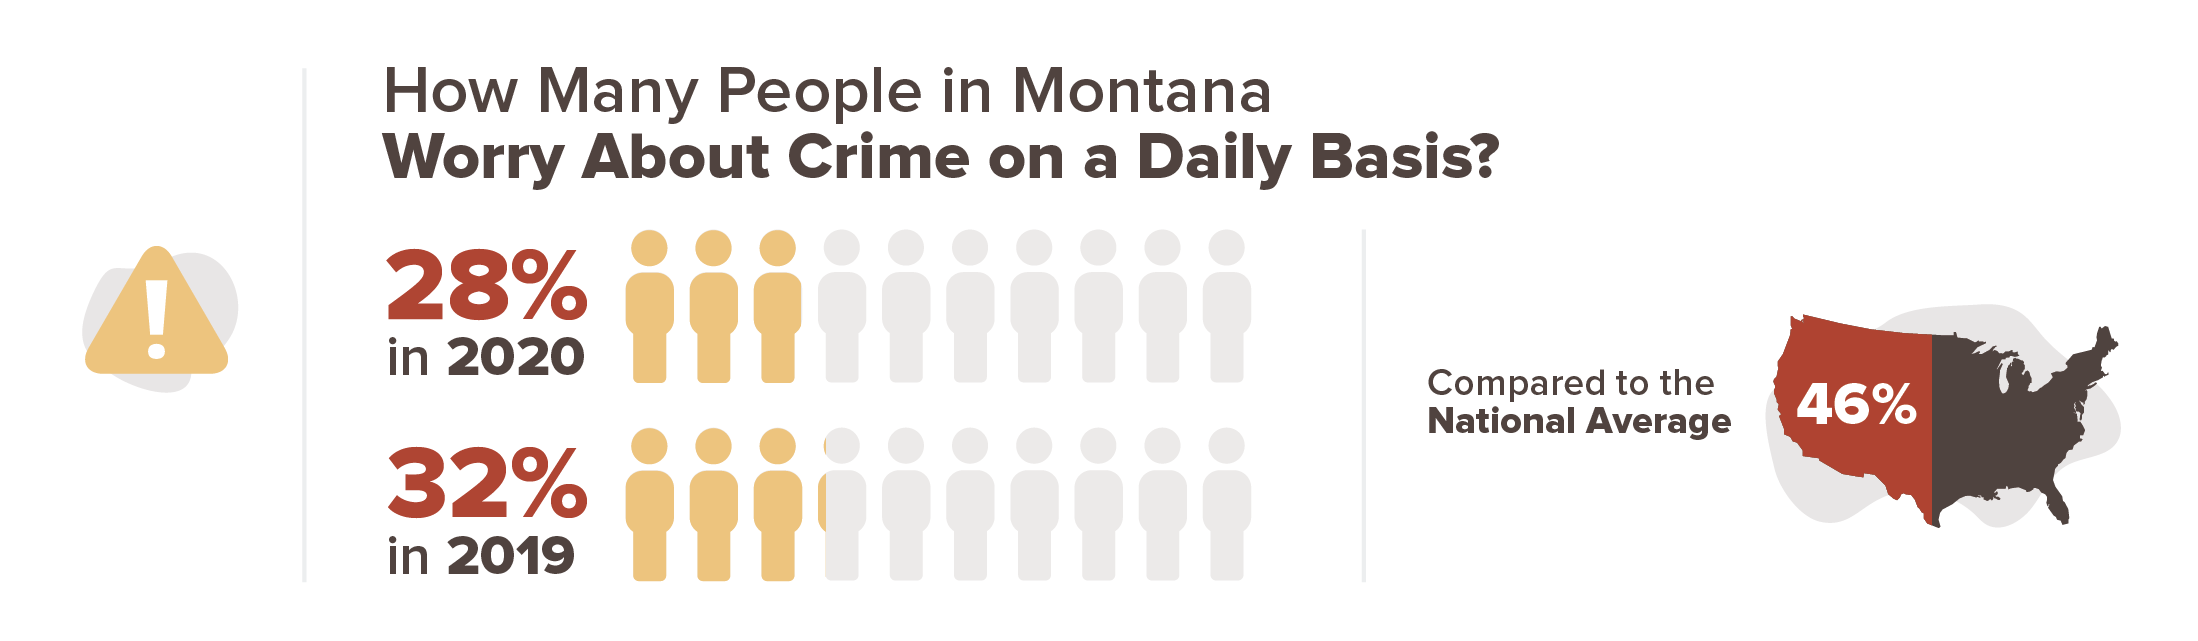 Montana crime concern infographic